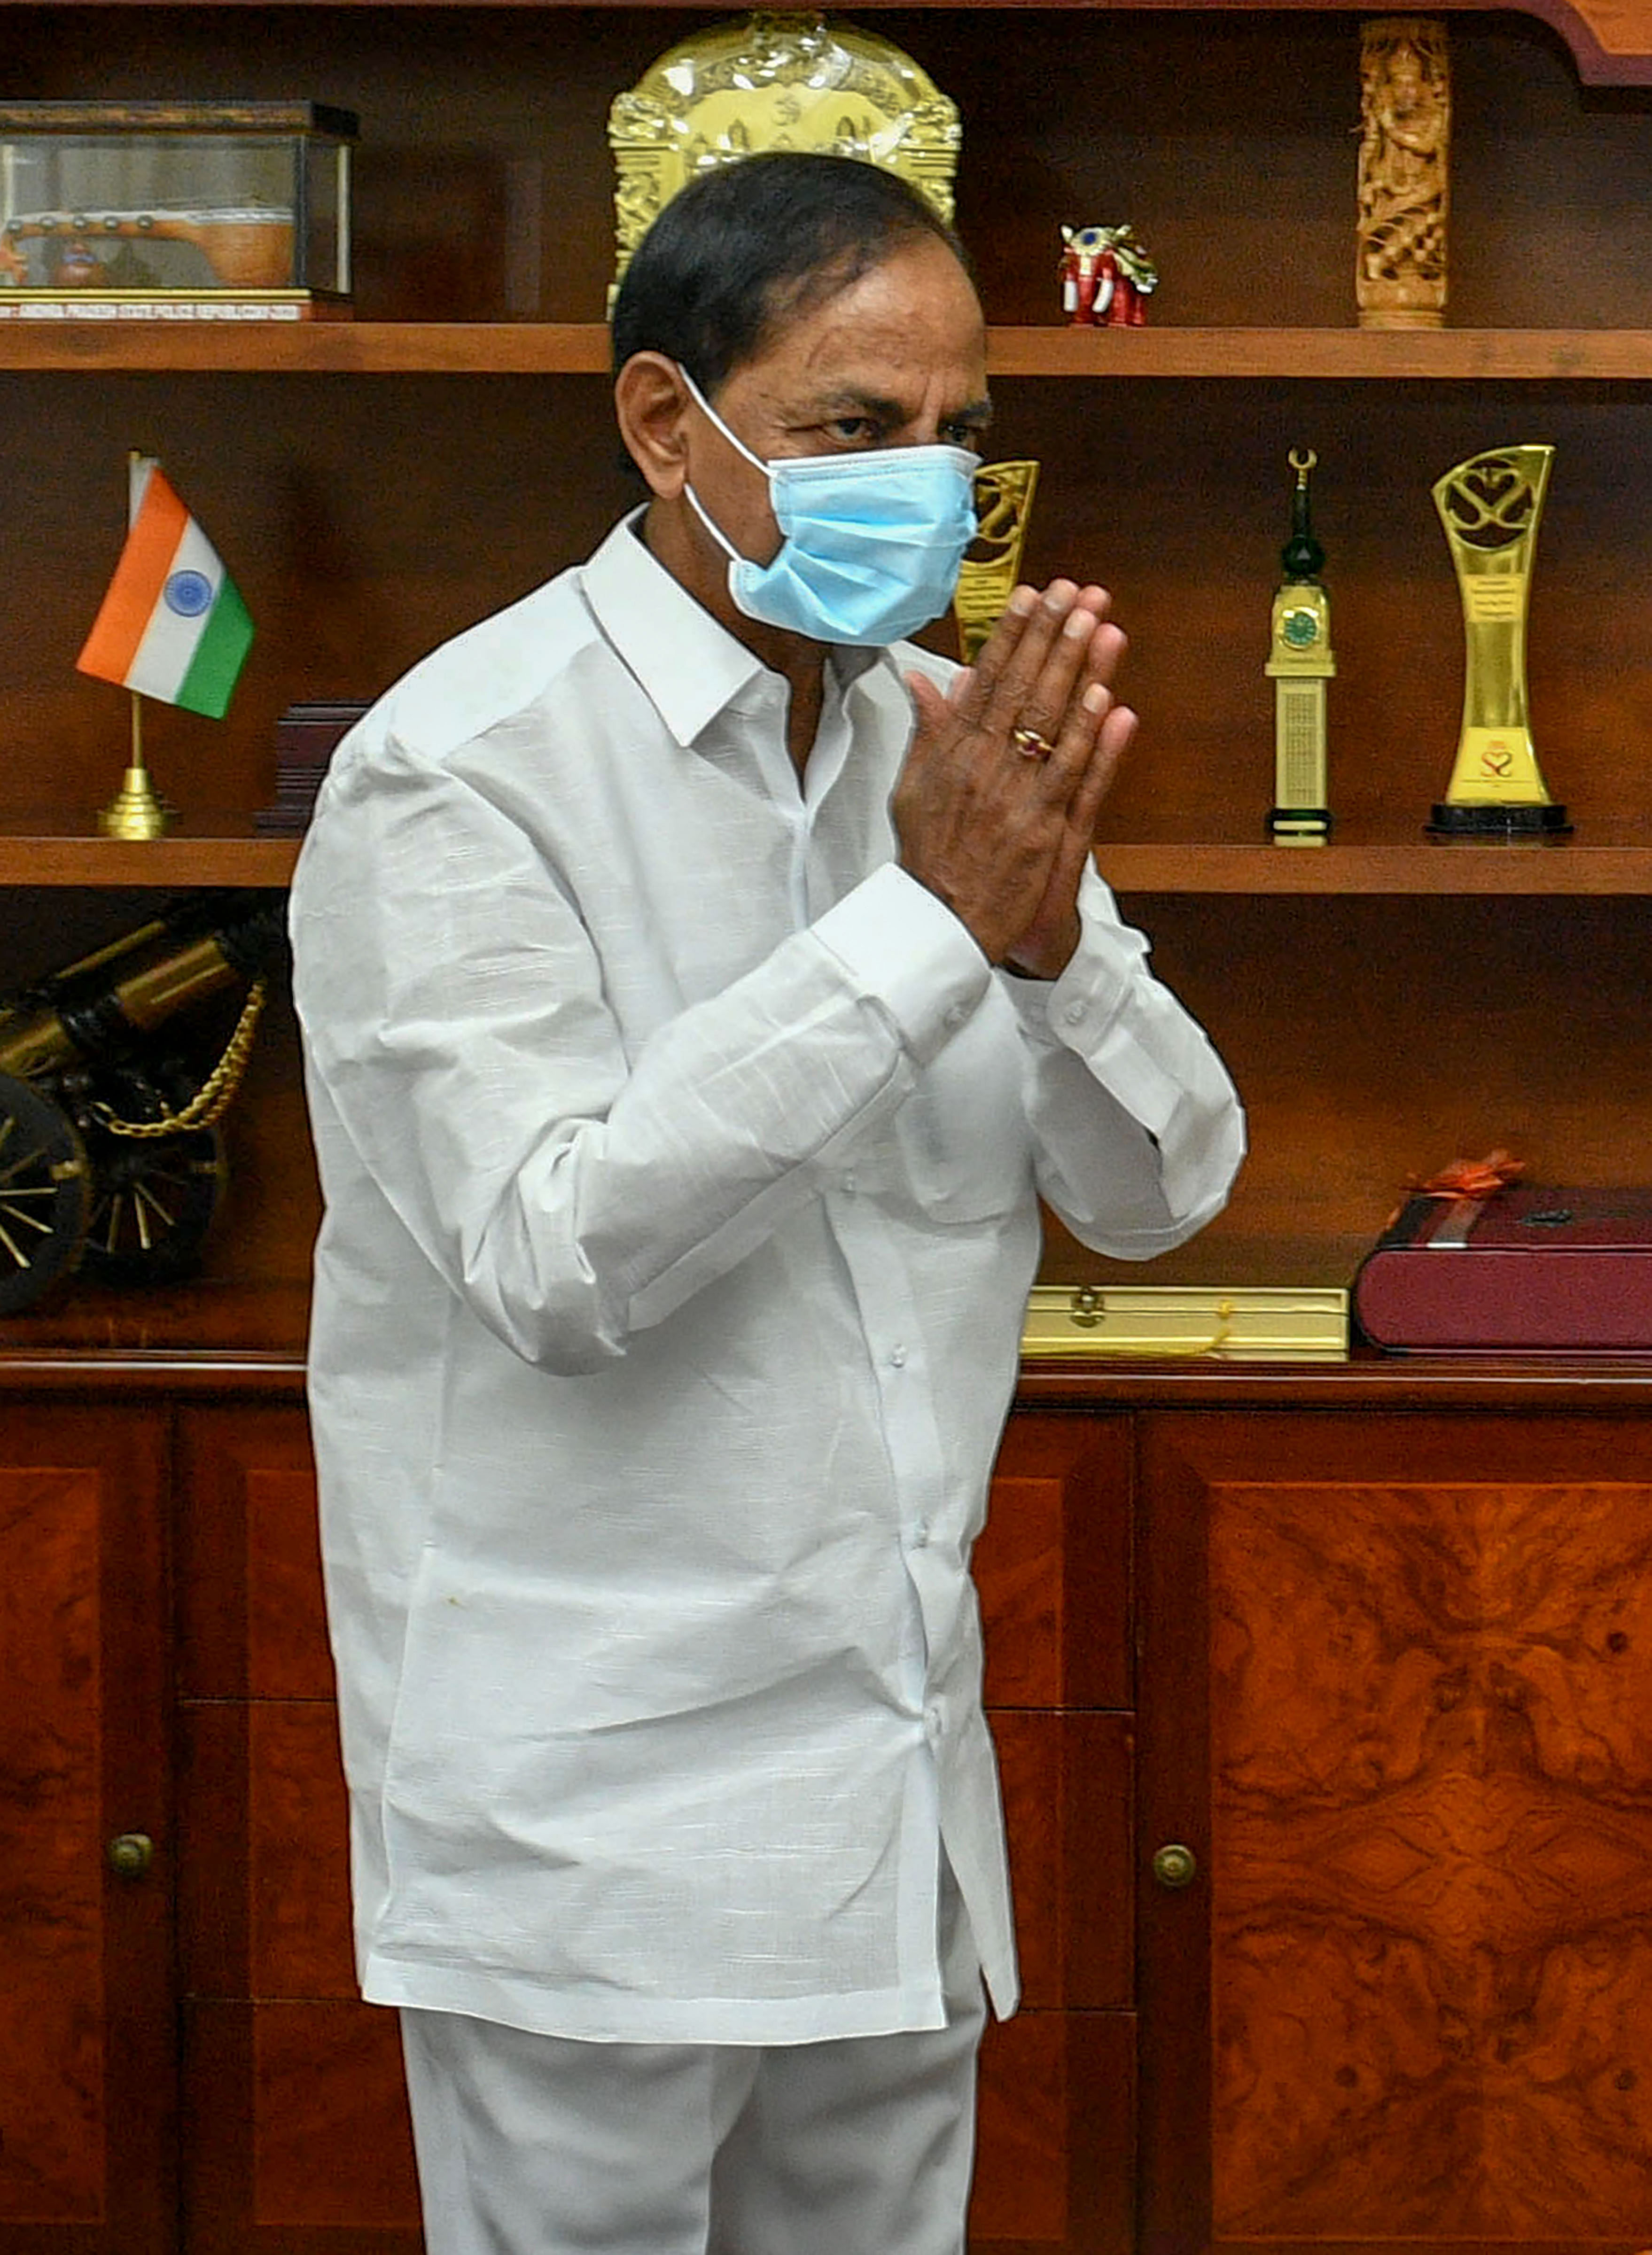 Telangana Chief Minister K Chandrashekar Rao wearing a mask greets as he arrives, in Hyderabad. (Credit: PTI Photo)